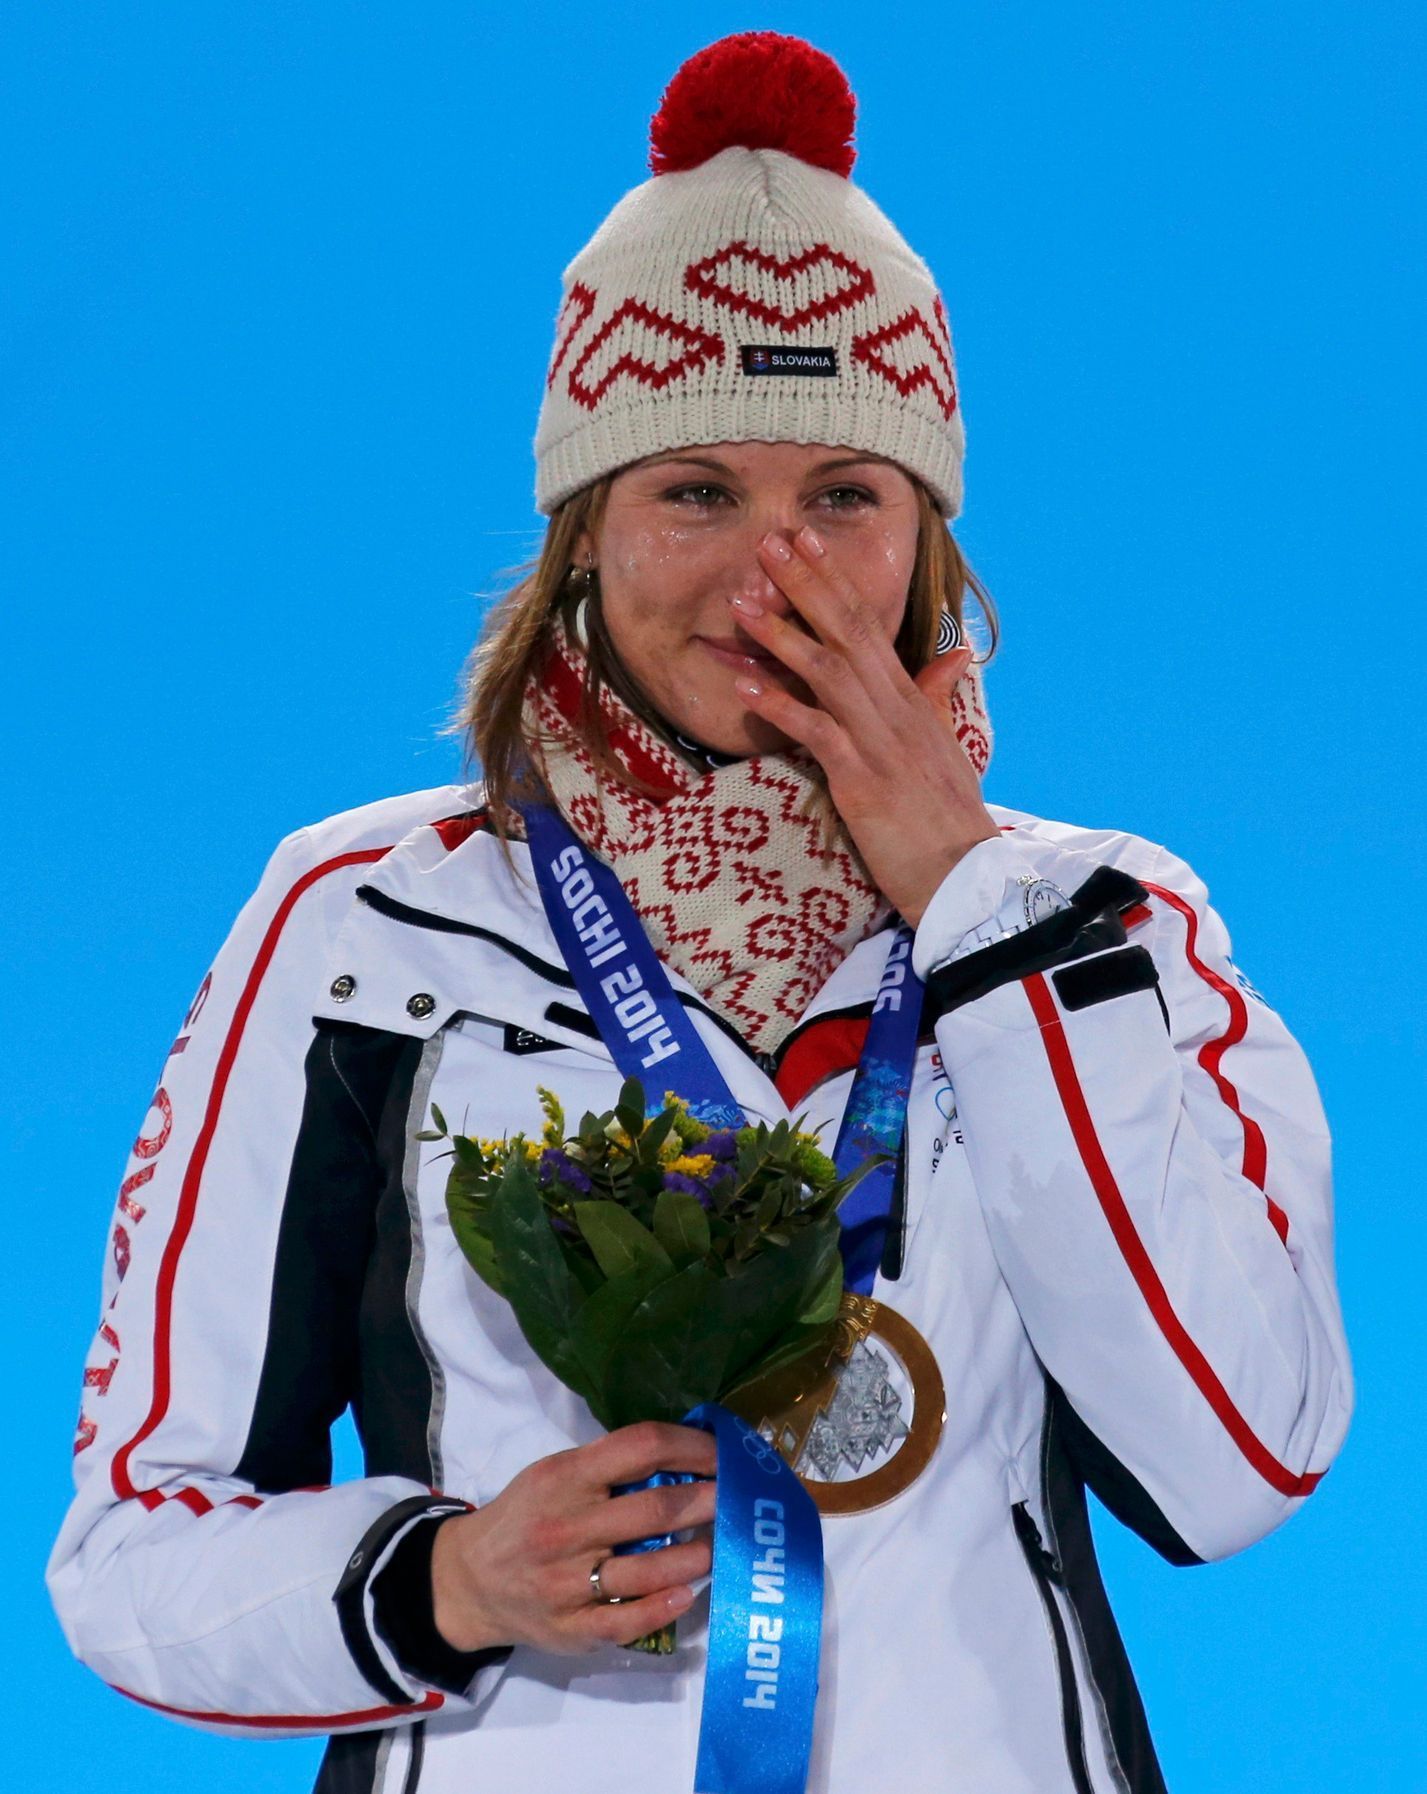 Gold medalist Anastasiya Kuzmina during the medal ceremony for the women's biathlon 7.5km sprint event at the Sochi 2014 Winter Olympics